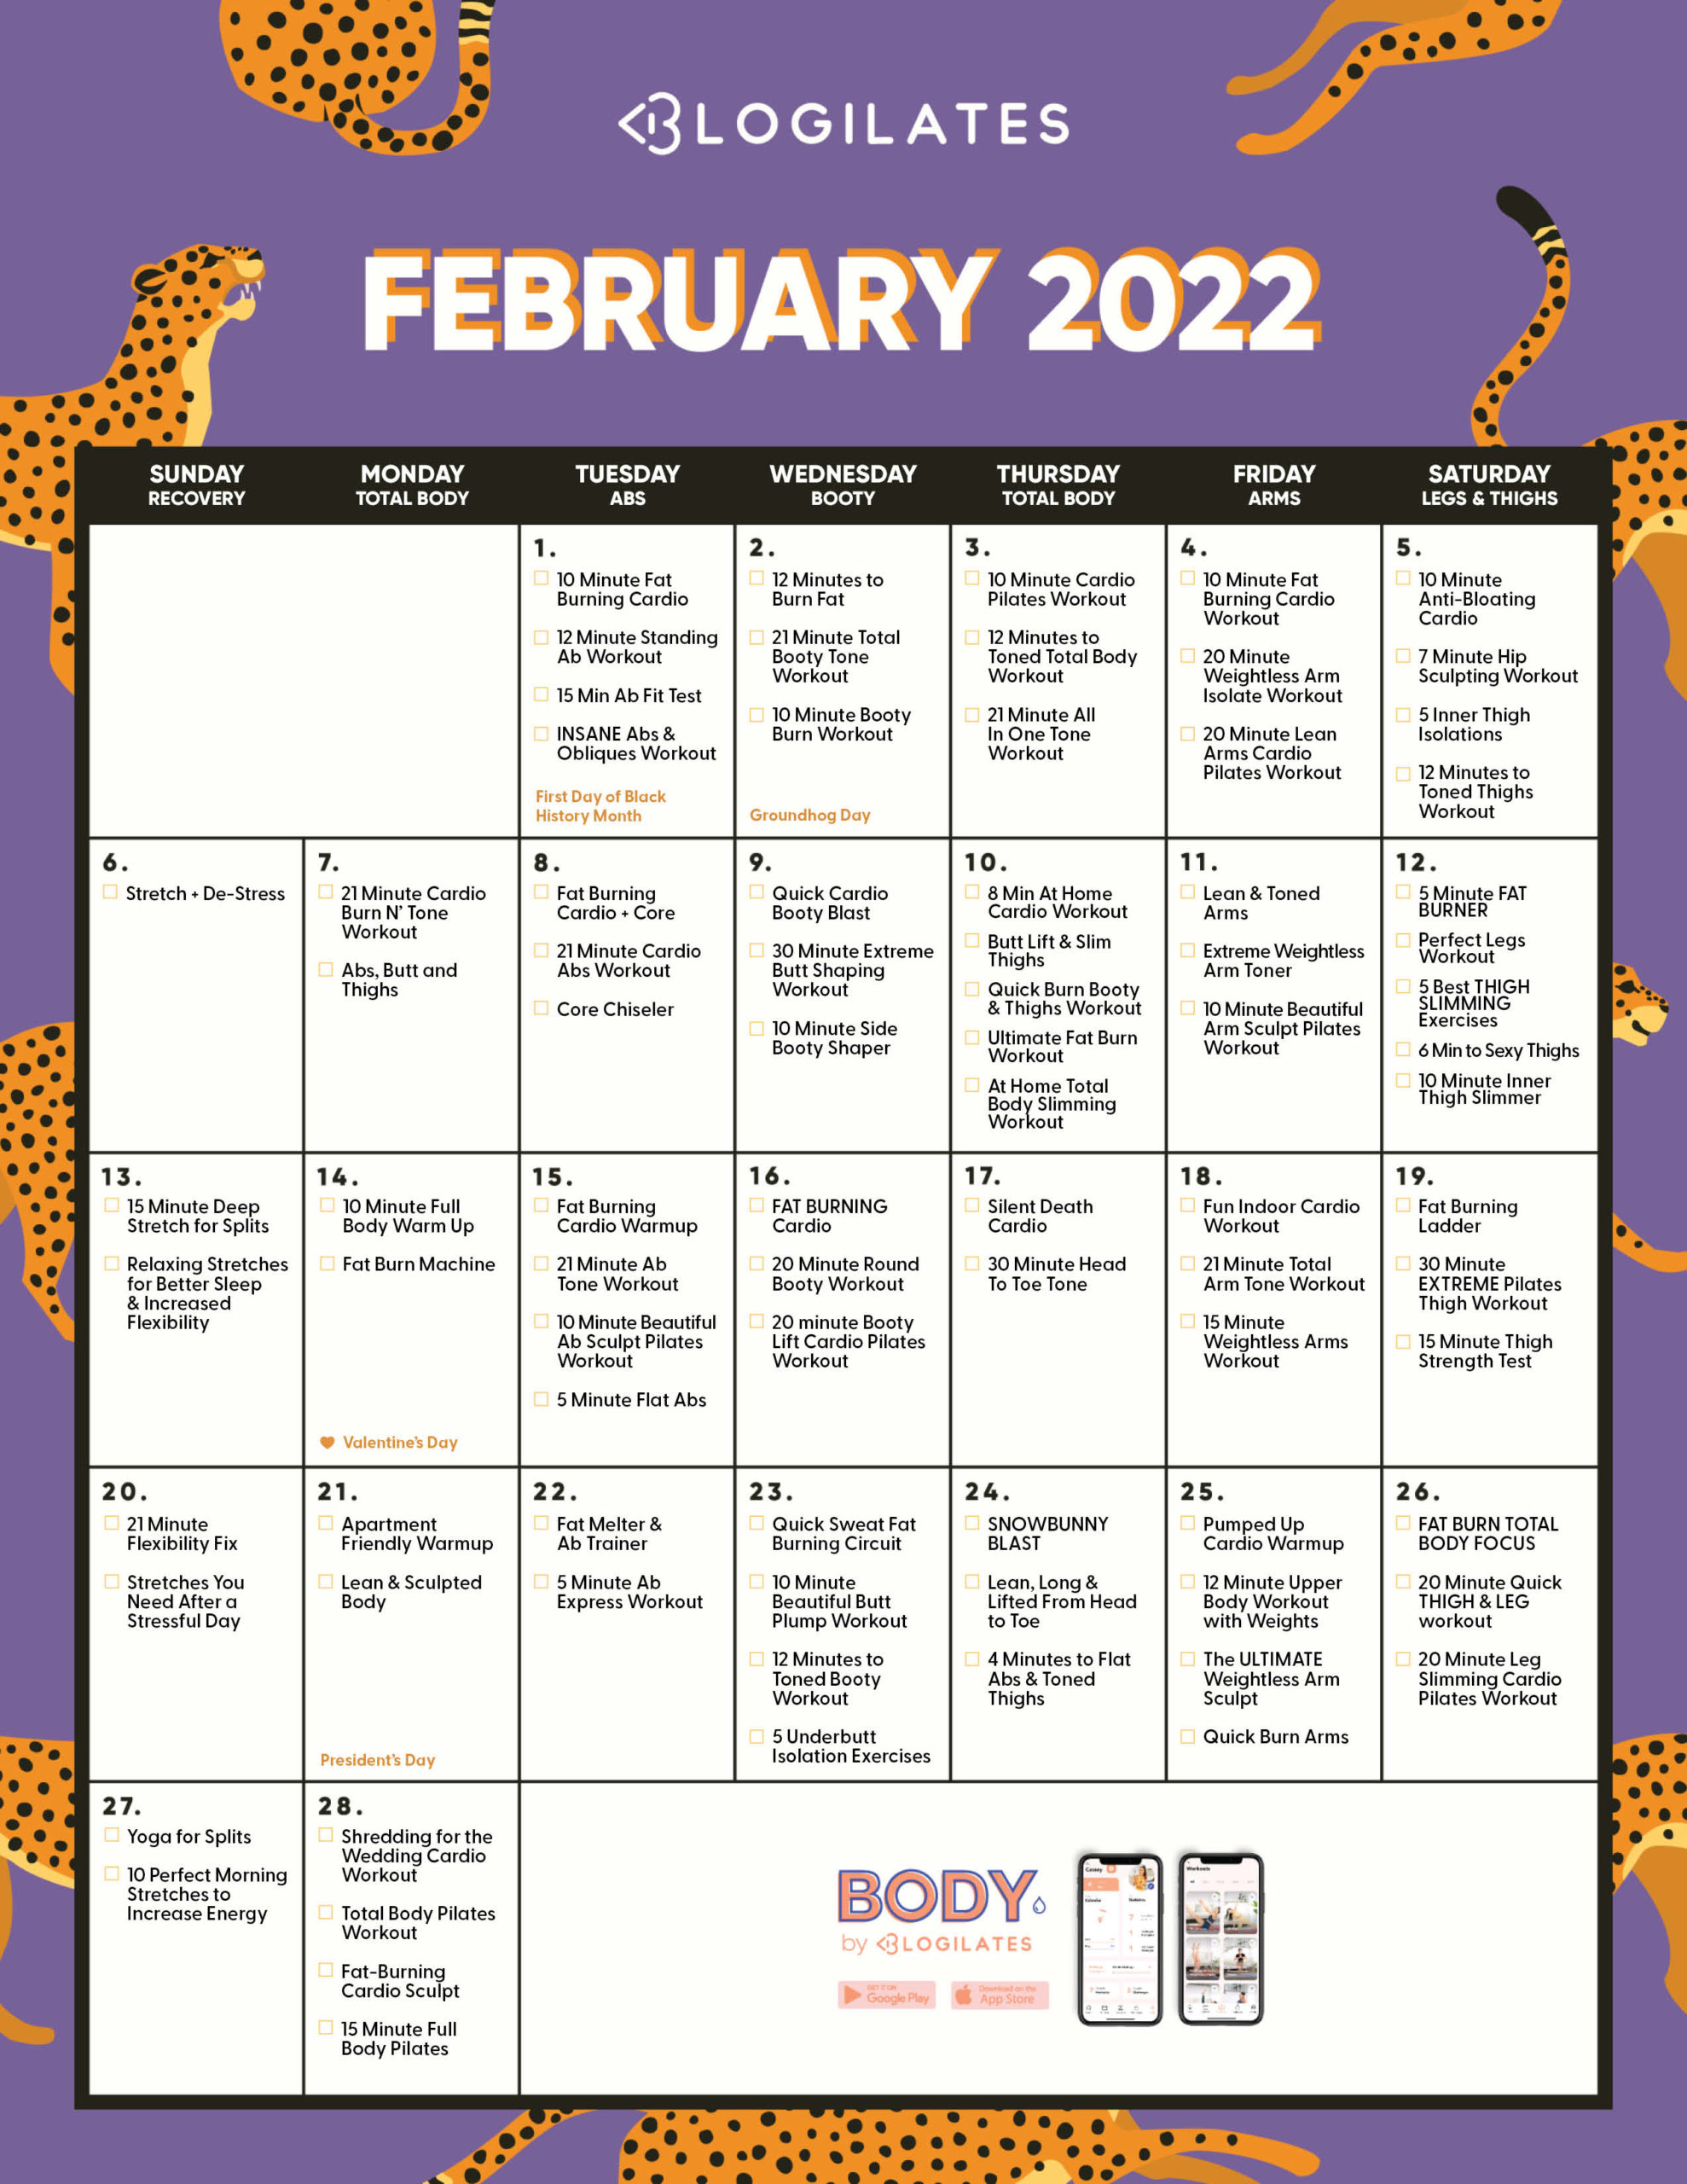 Febuary 2022 Calendar The Blogilates February 2022 Workout Calendar! - Blogilates